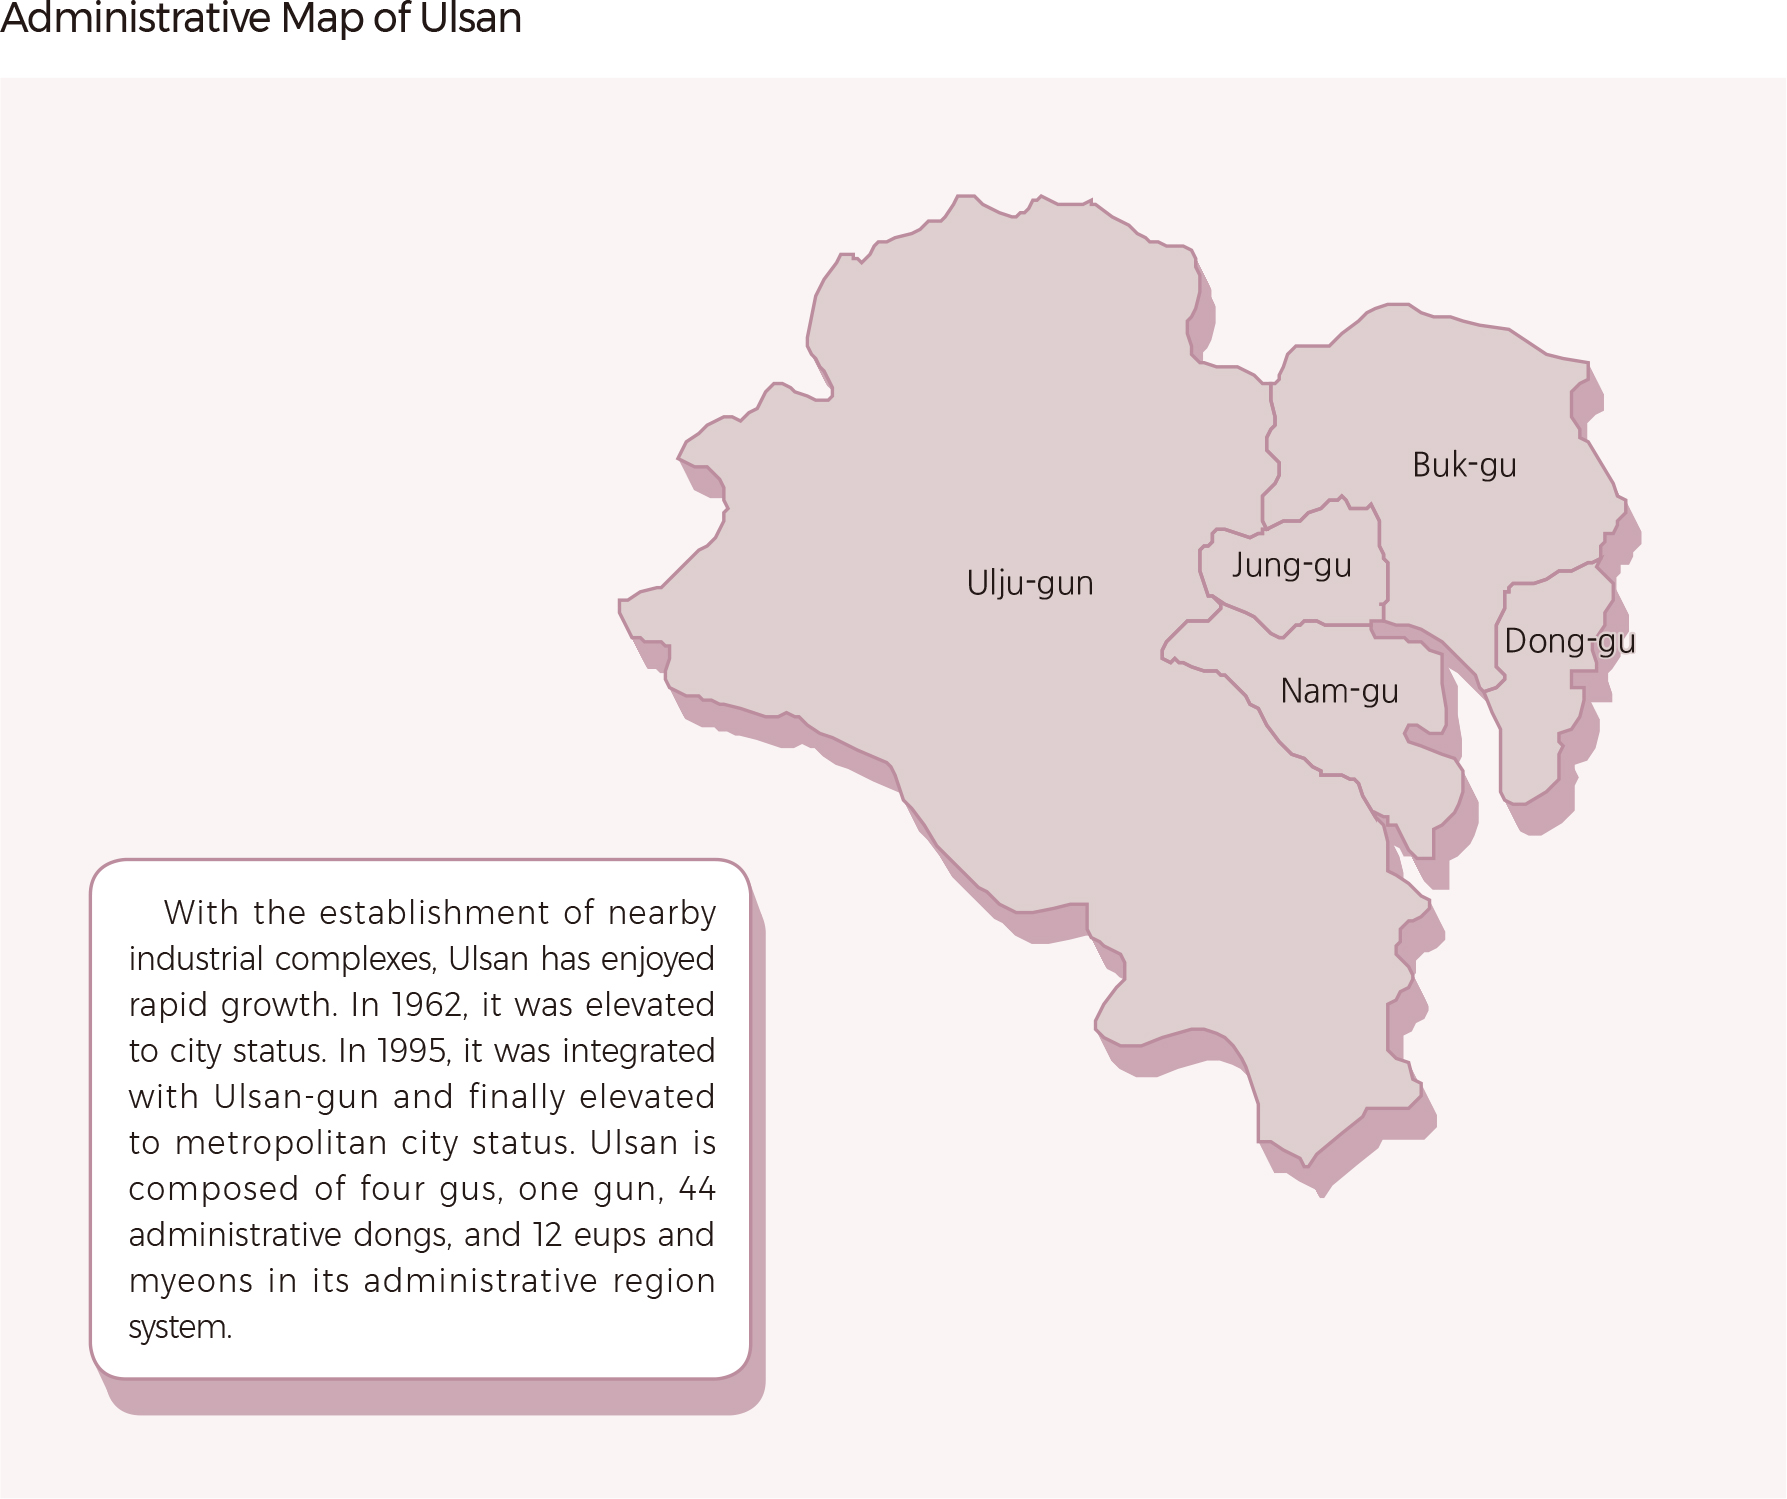 Administrative Map of Ulsan